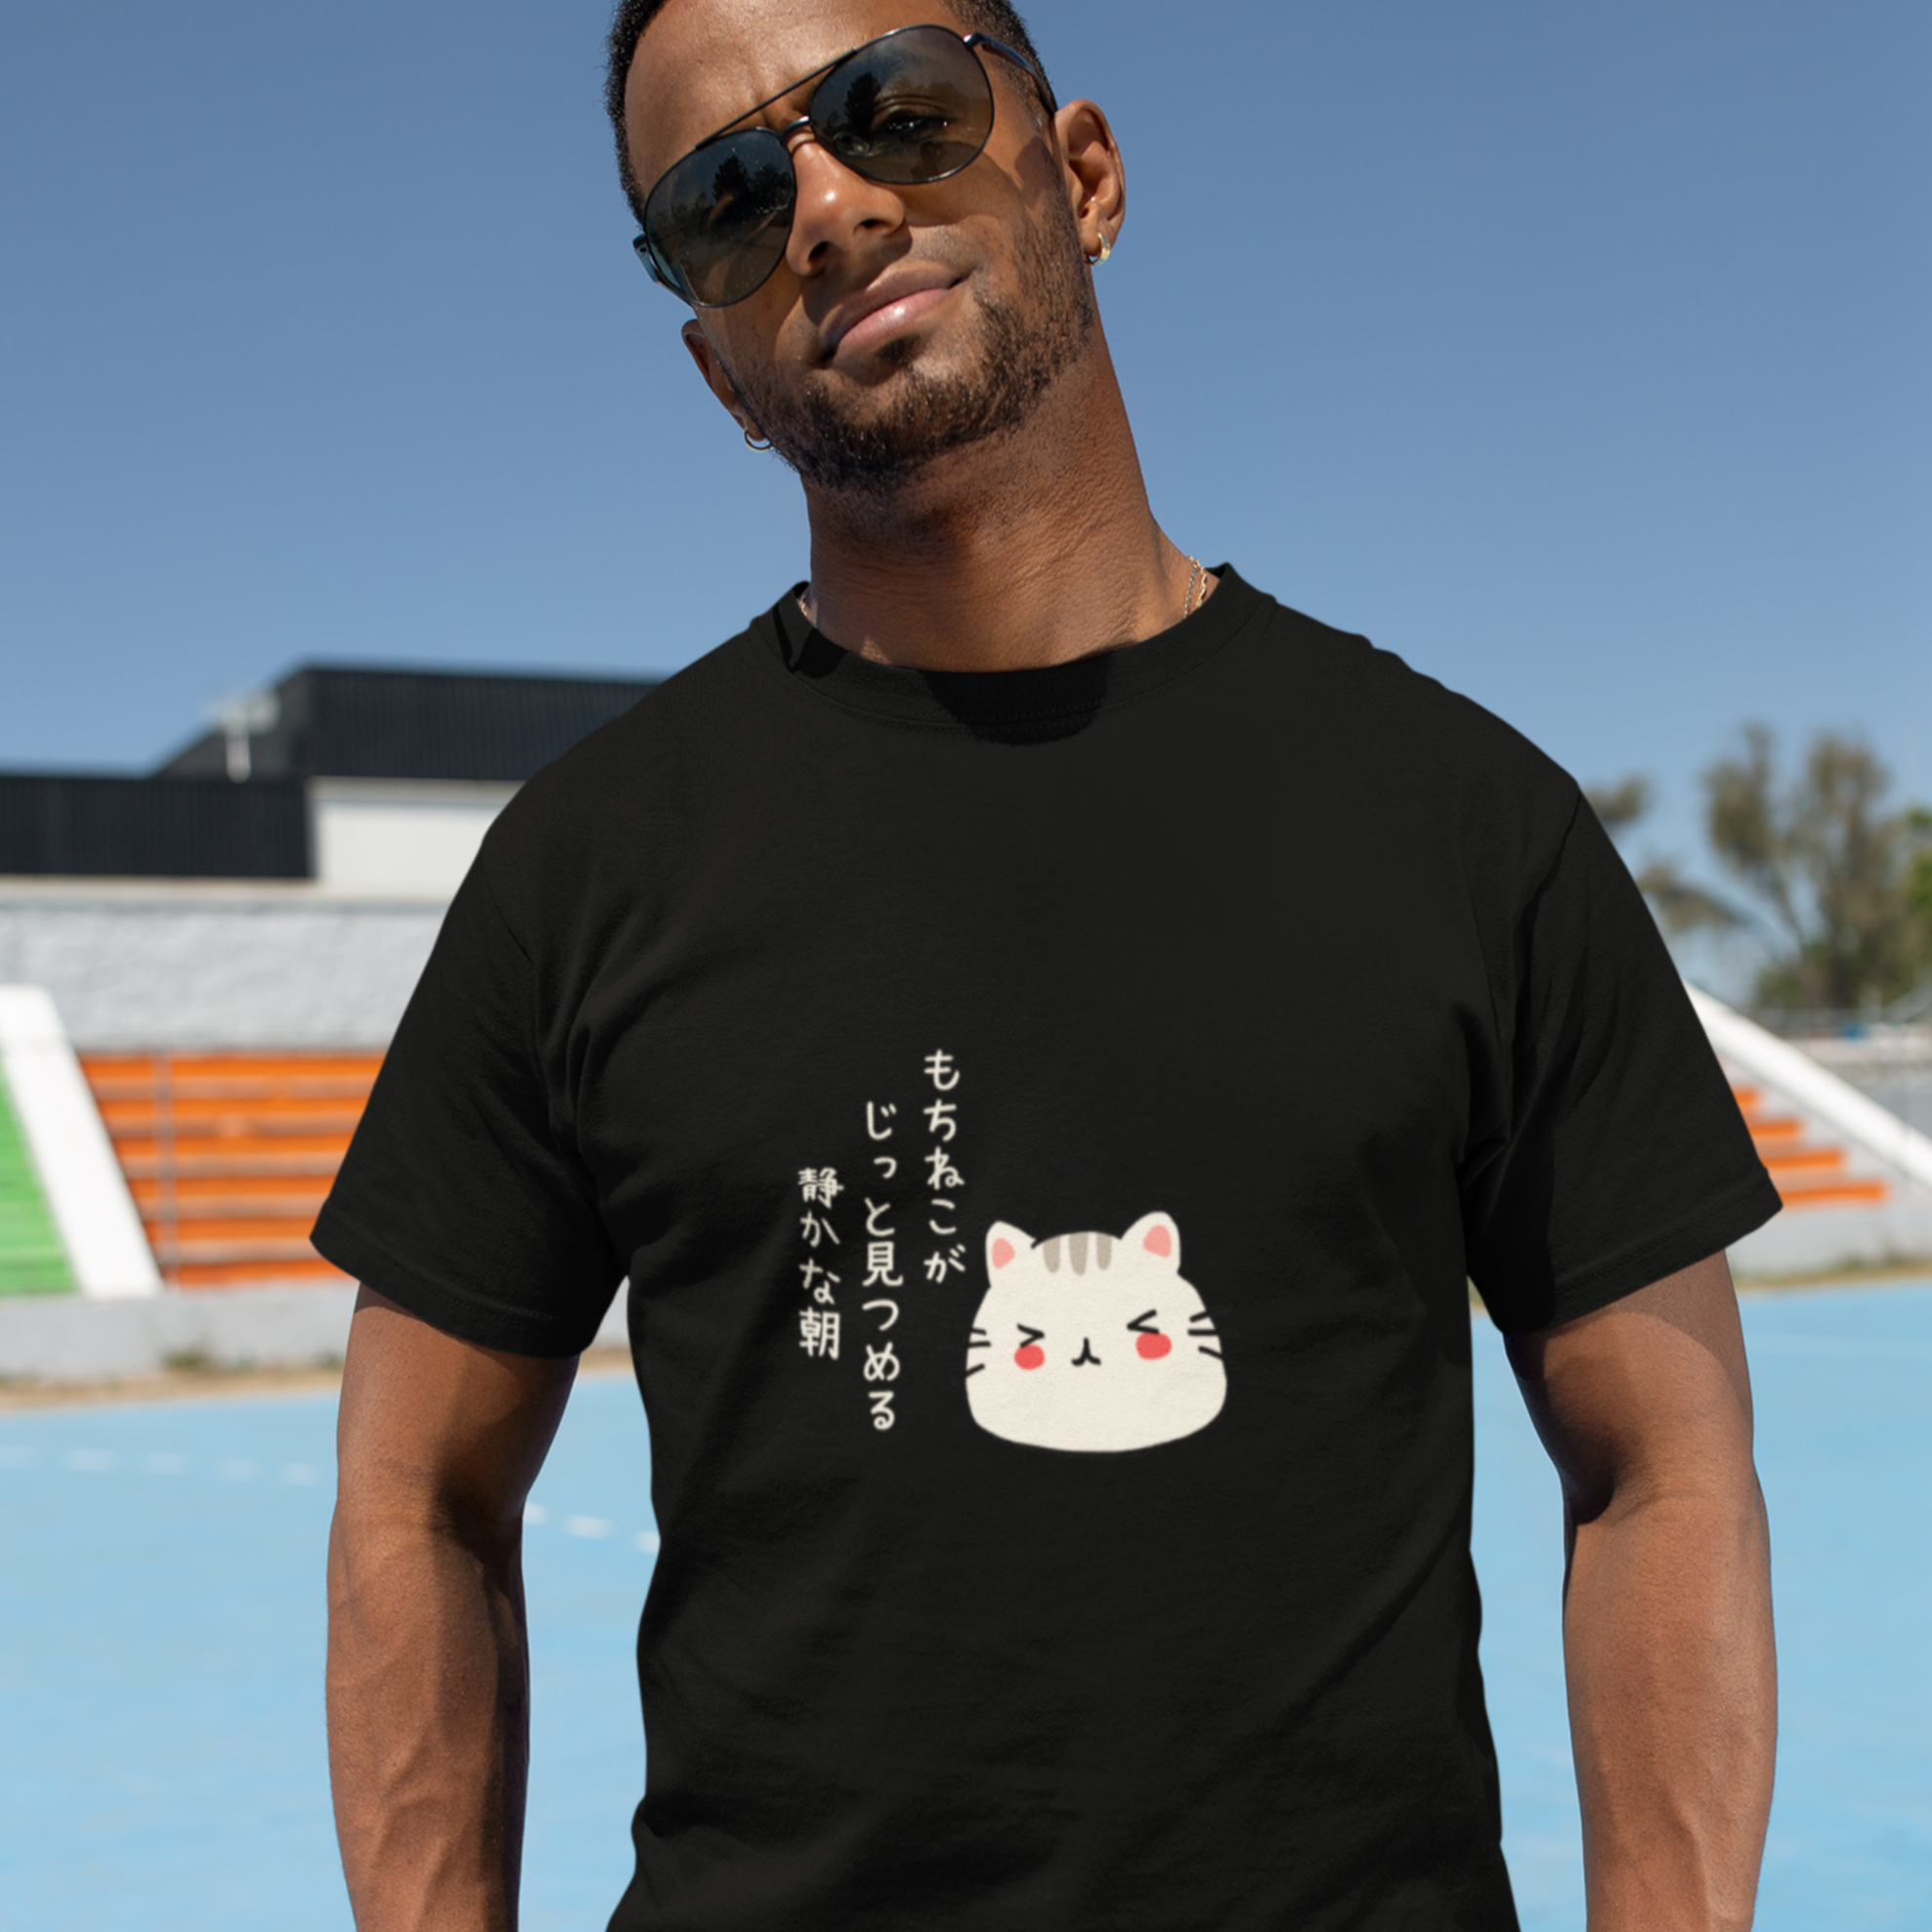 Mochi Cat T-Shirt: Adorable Japanese Foodie Shirt with Haiku Art of Mochi Neko - Perfect Gift Idea for Cat Lovers